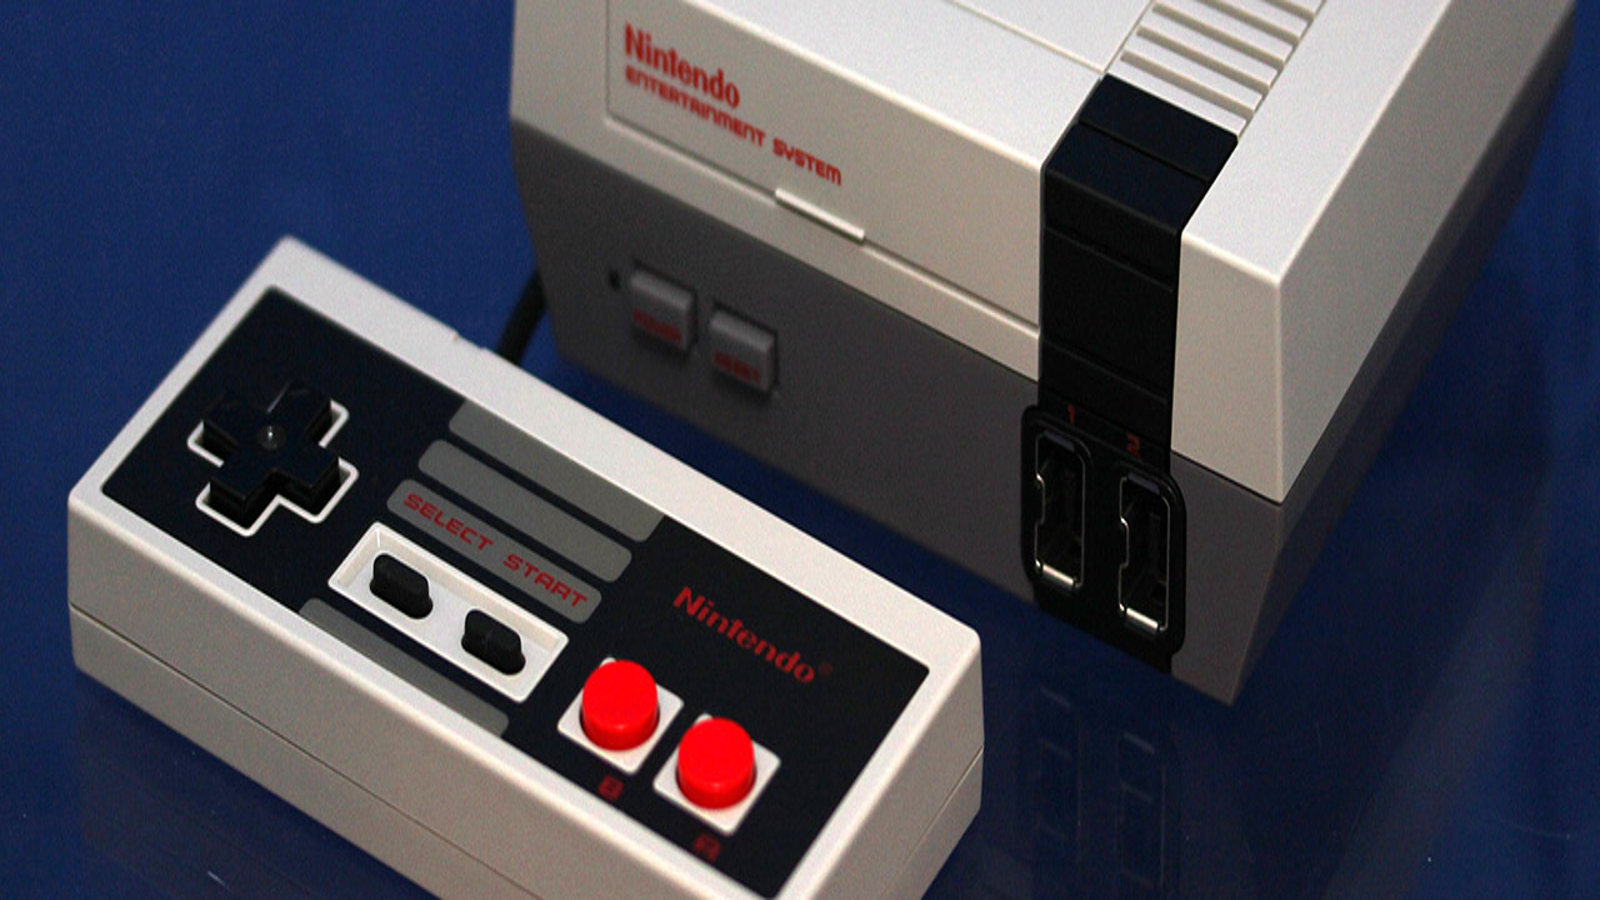 Nintendo Classic Mini: Nintendo Entertainment System (NES) Controller